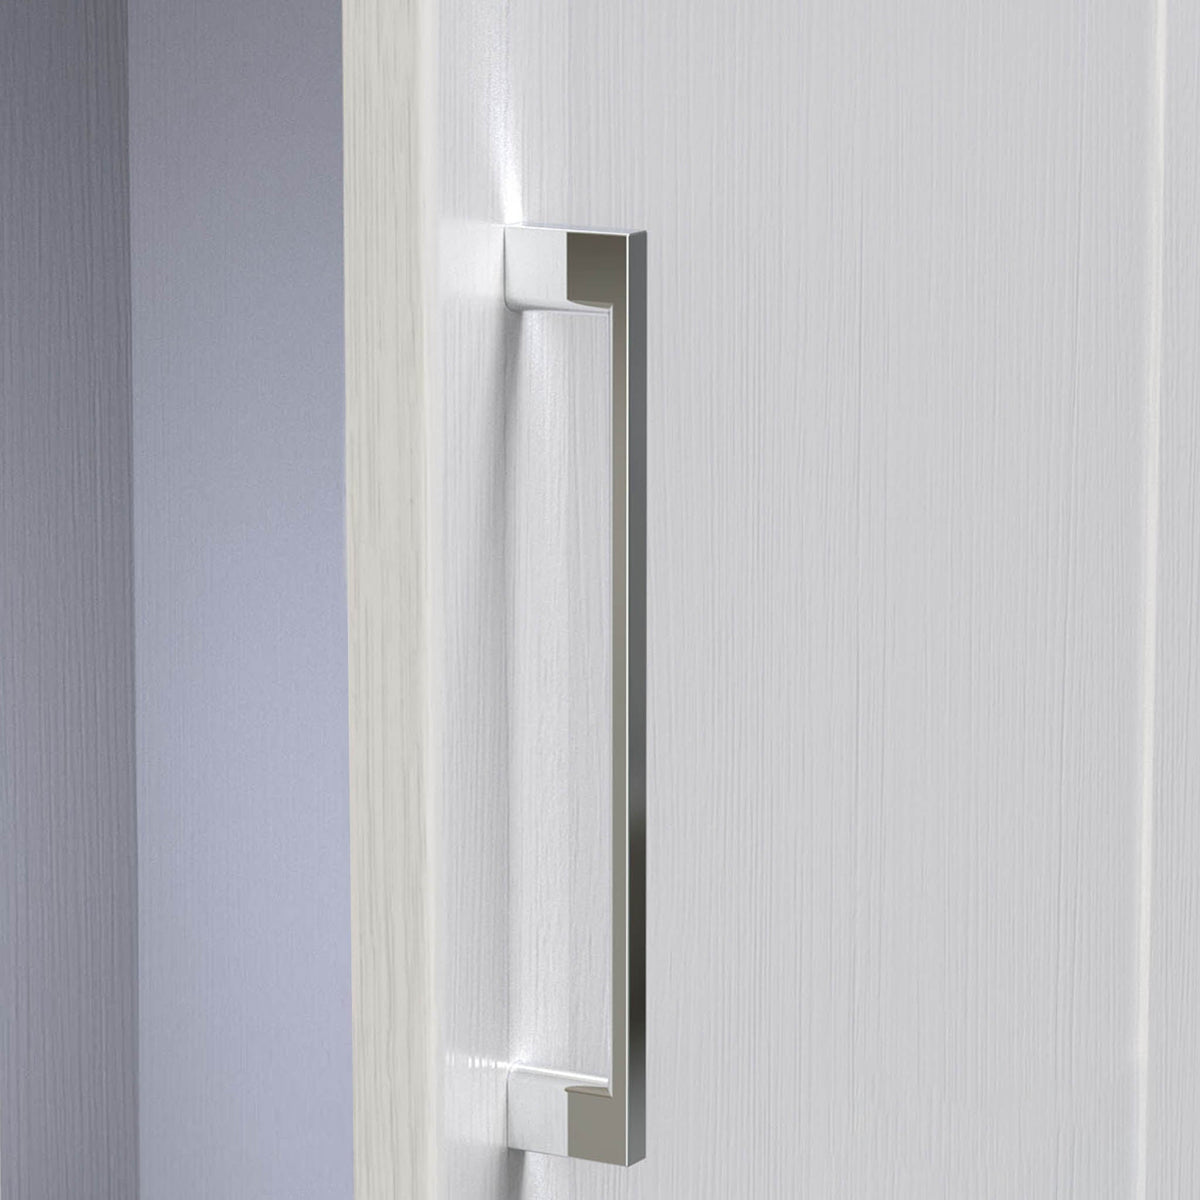 Bellamy White  Door Double Wardrobe chrome handle close up